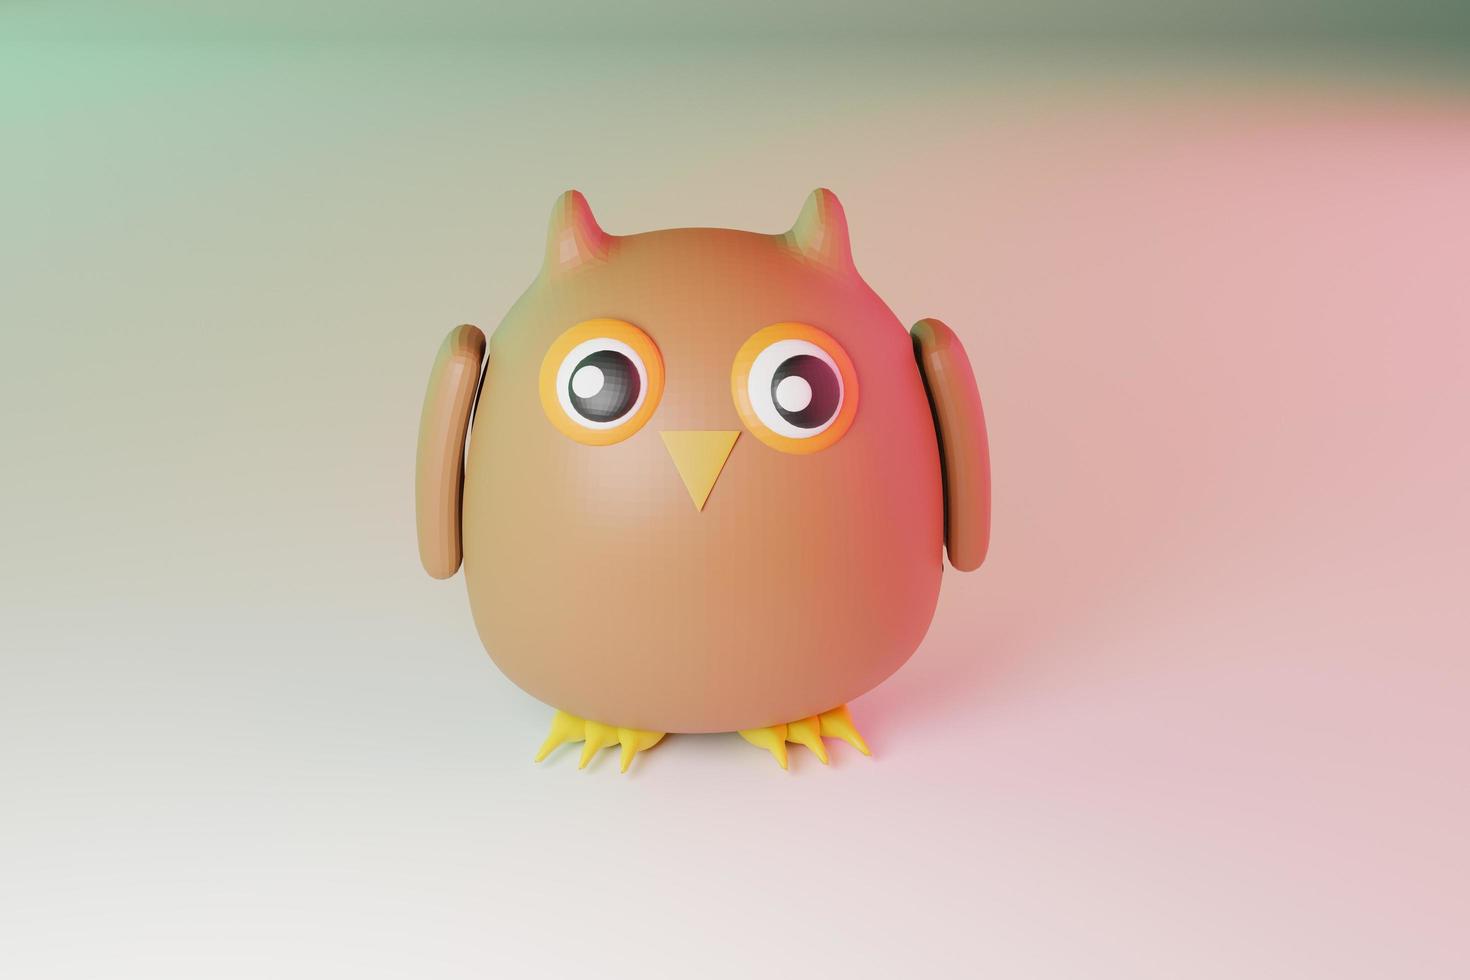 ovely owl cartoon character, 3d illustration photo